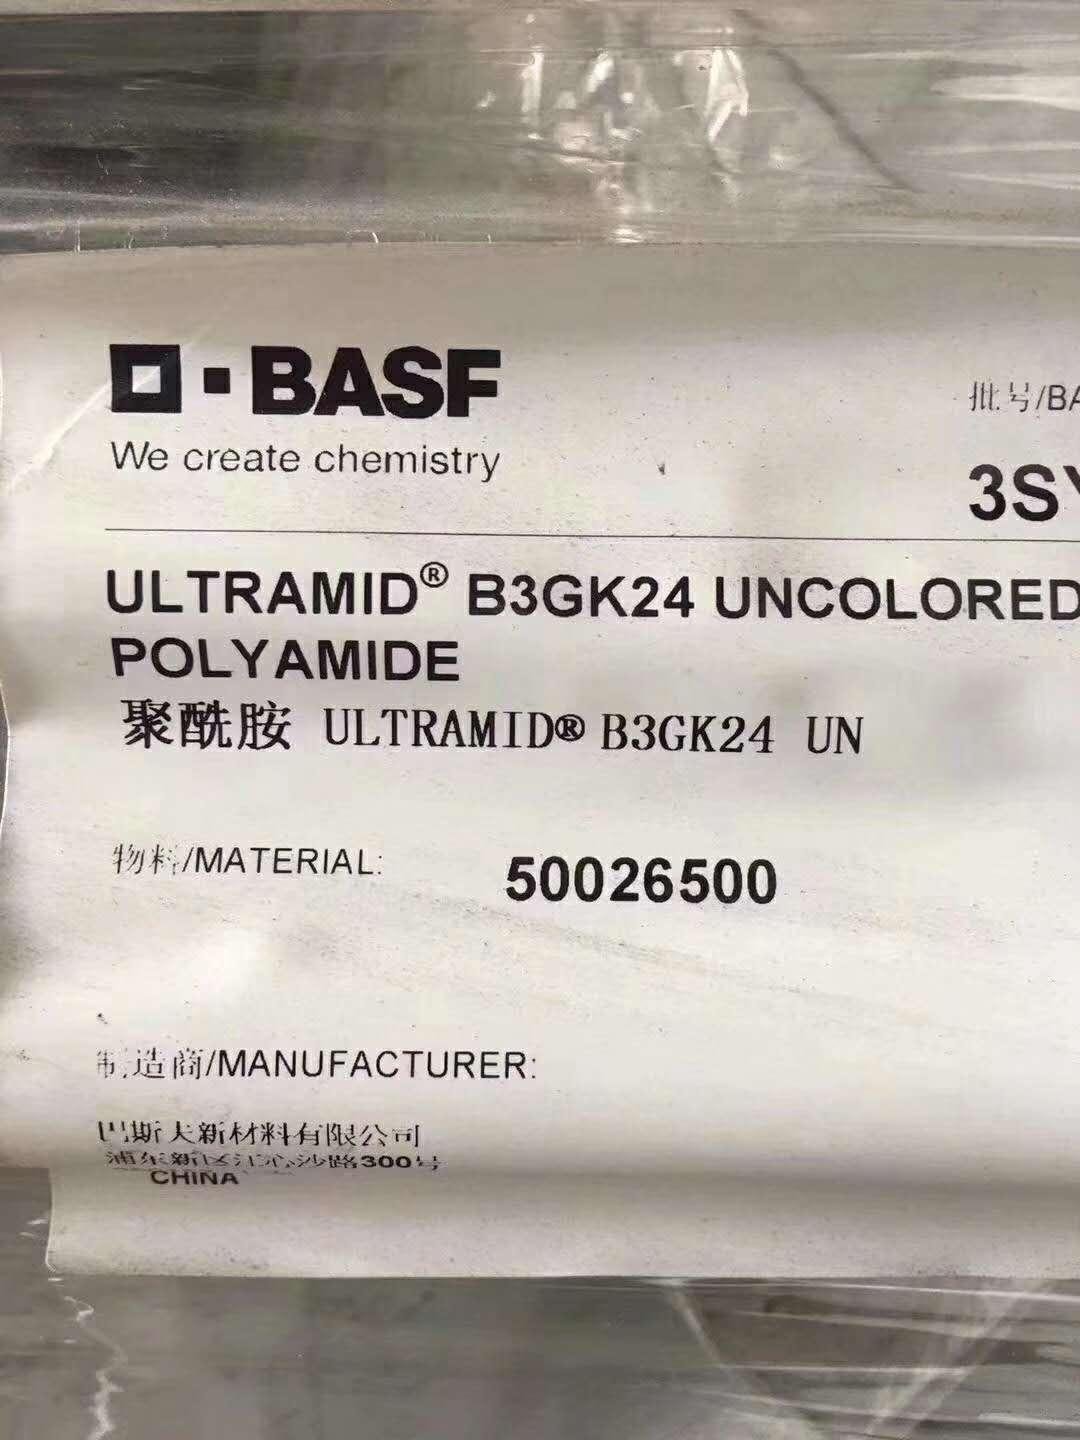 Ultramid B3GK24